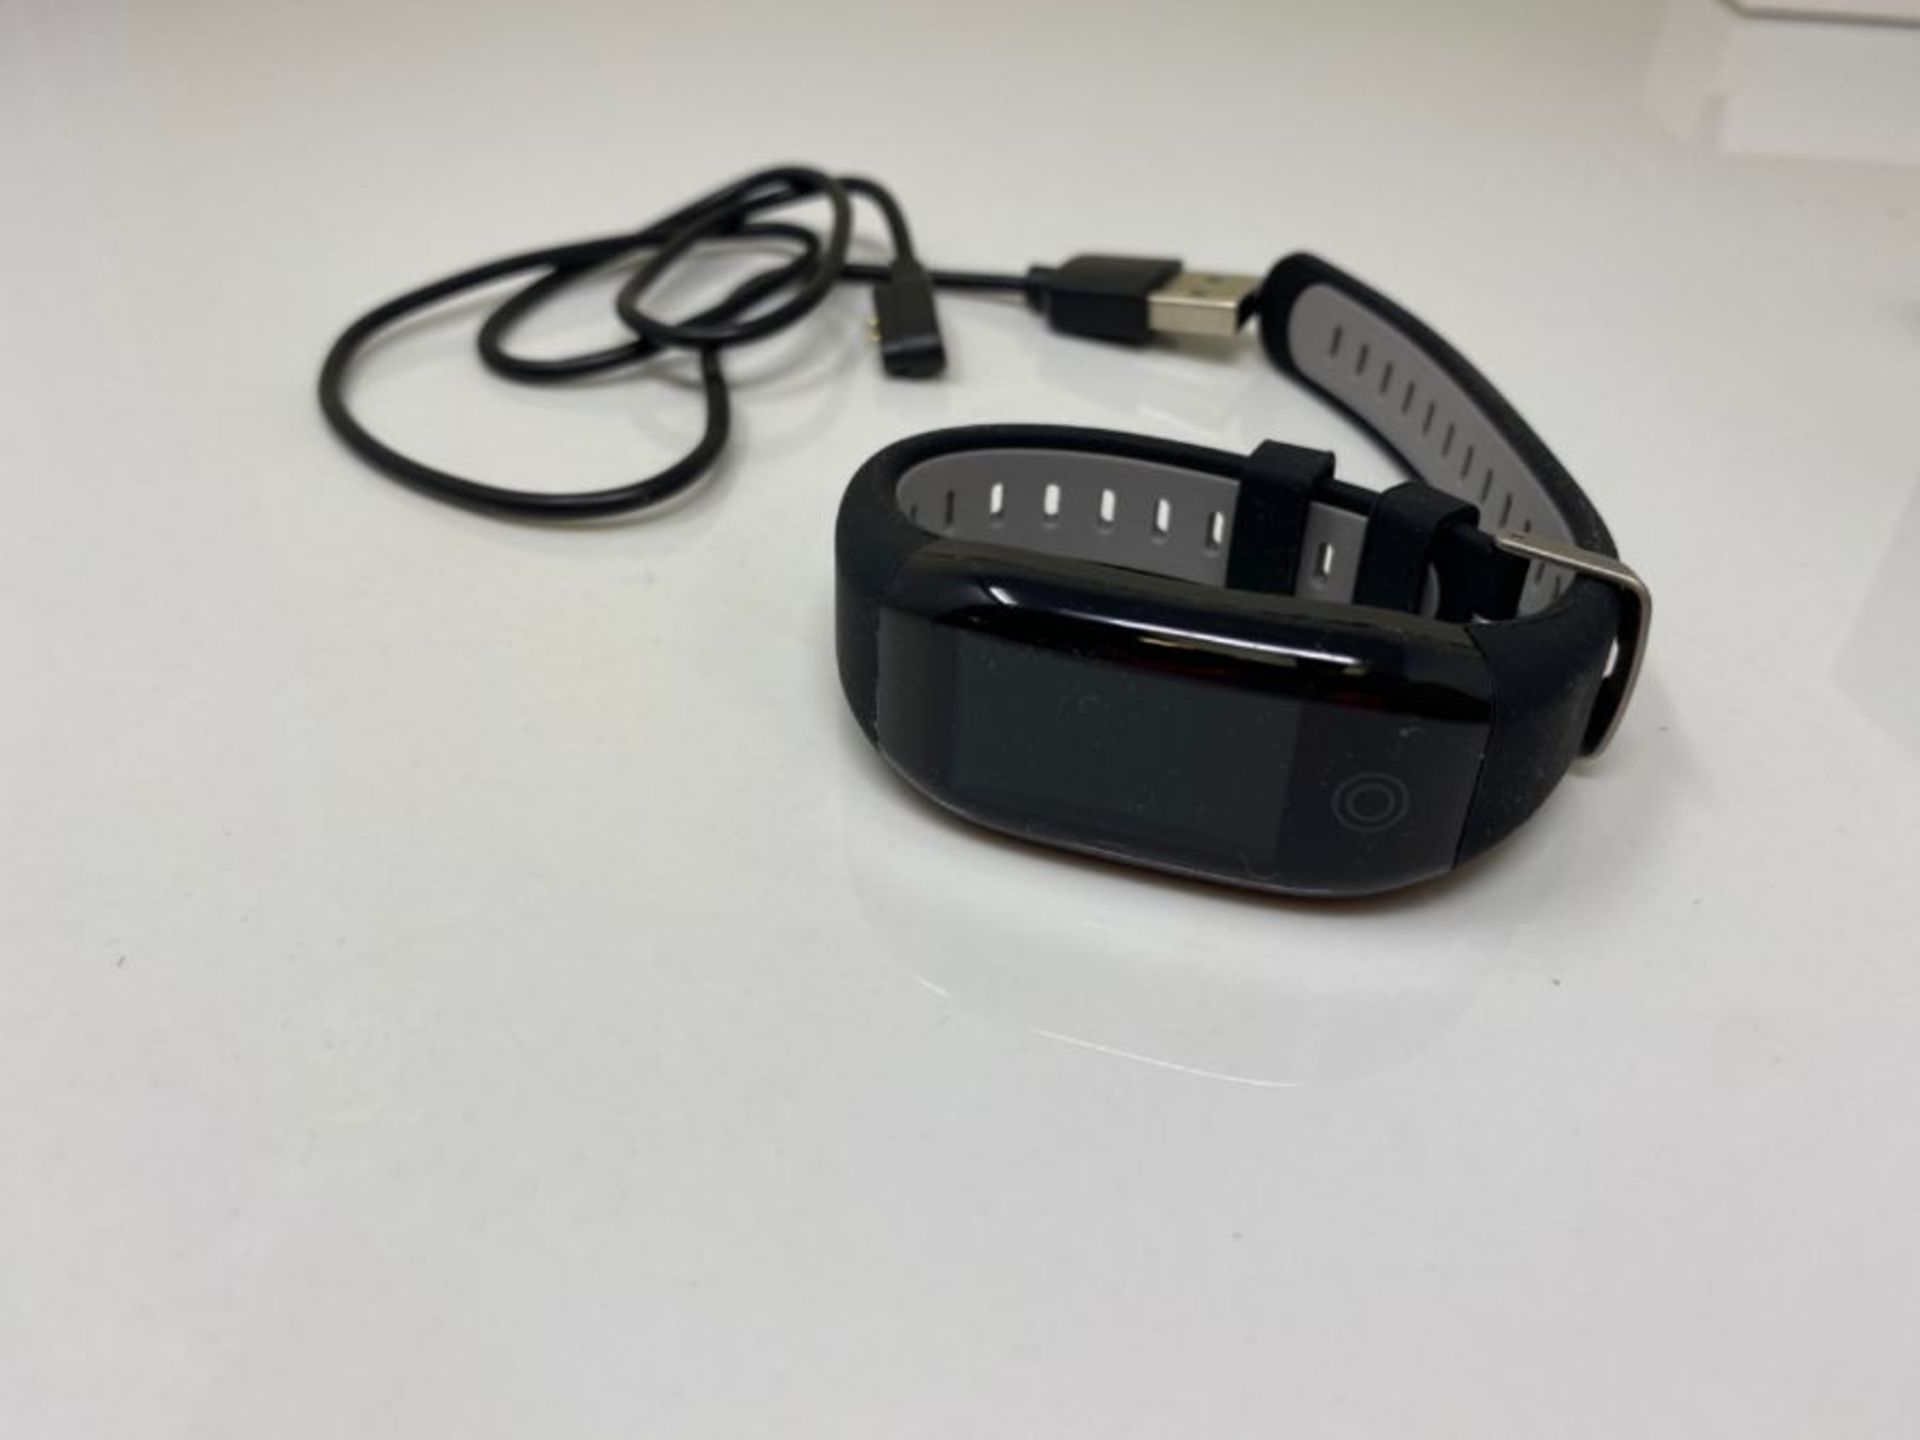 Tipmant Fitness Armband mit Pulsmesser Blutdruckmessung Smartwatch Fitness Tracker Was - Image 3 of 3